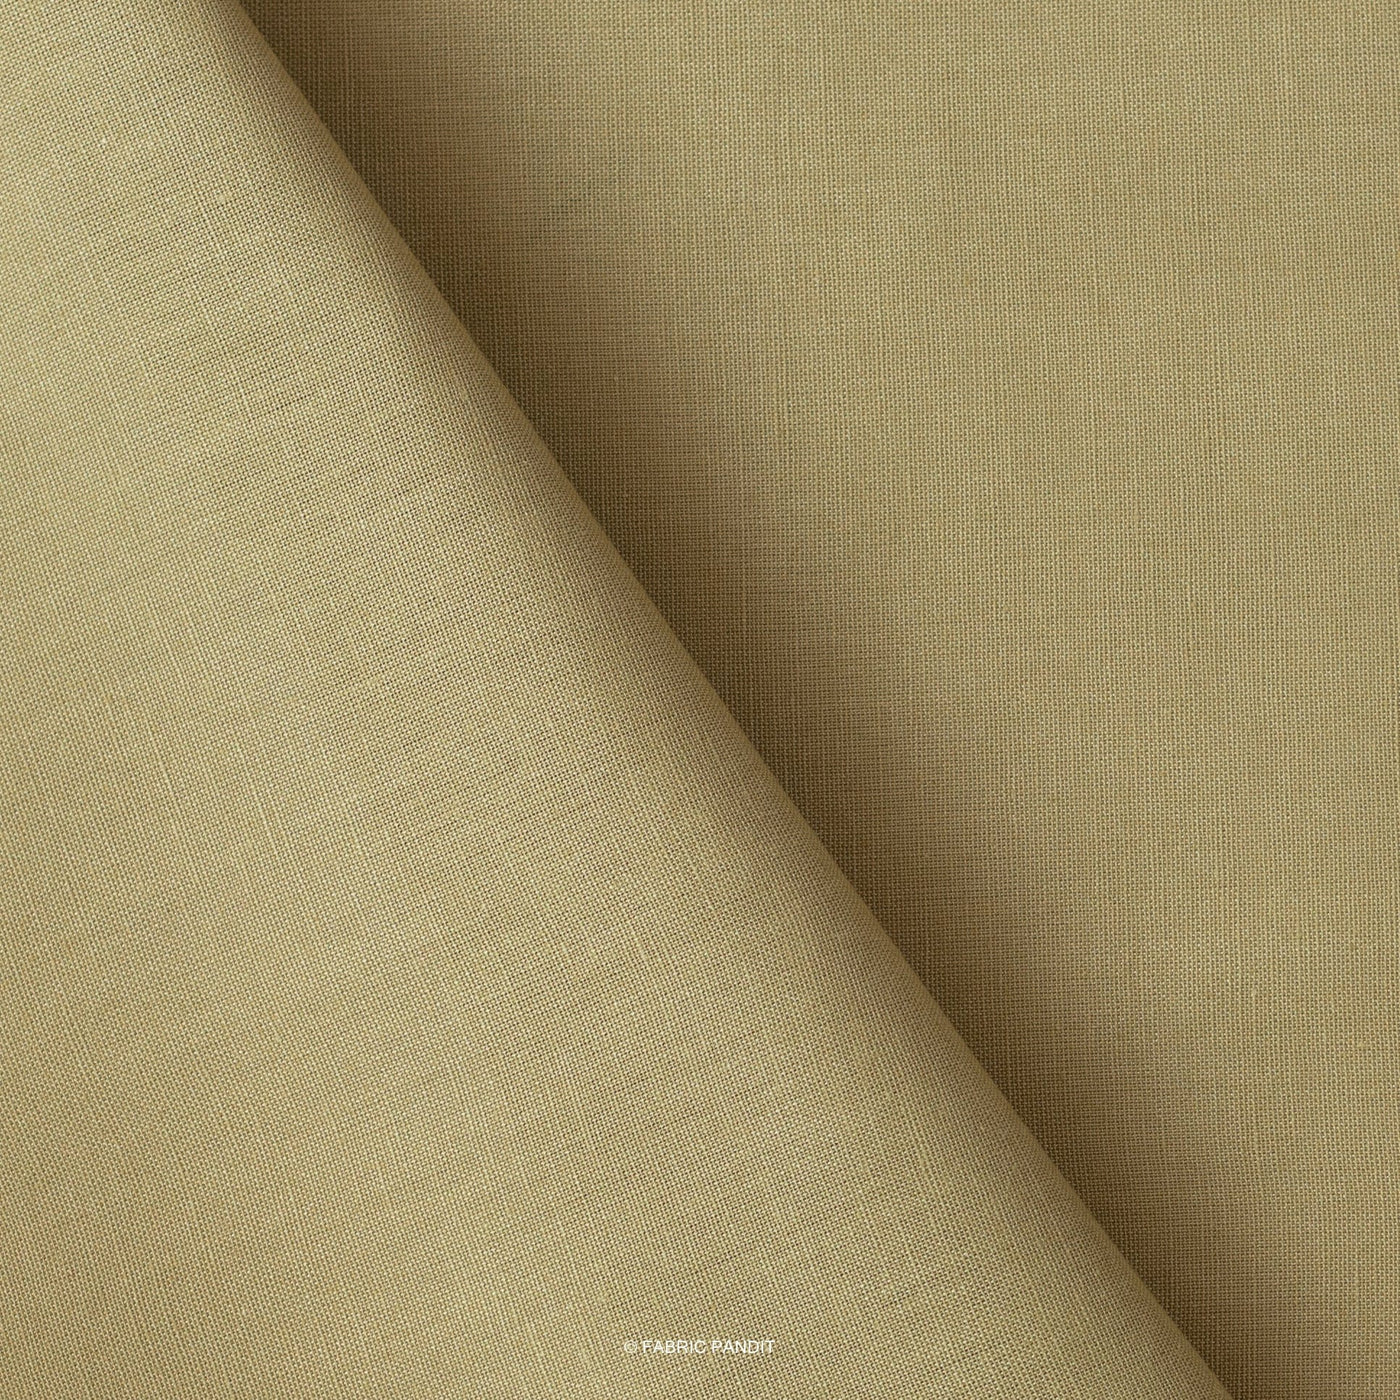 Fabric Pandit Cut Piece (CUT PIECE) Apple Green Color Pure Cotton Linen Fabric (Width 42 Inches)